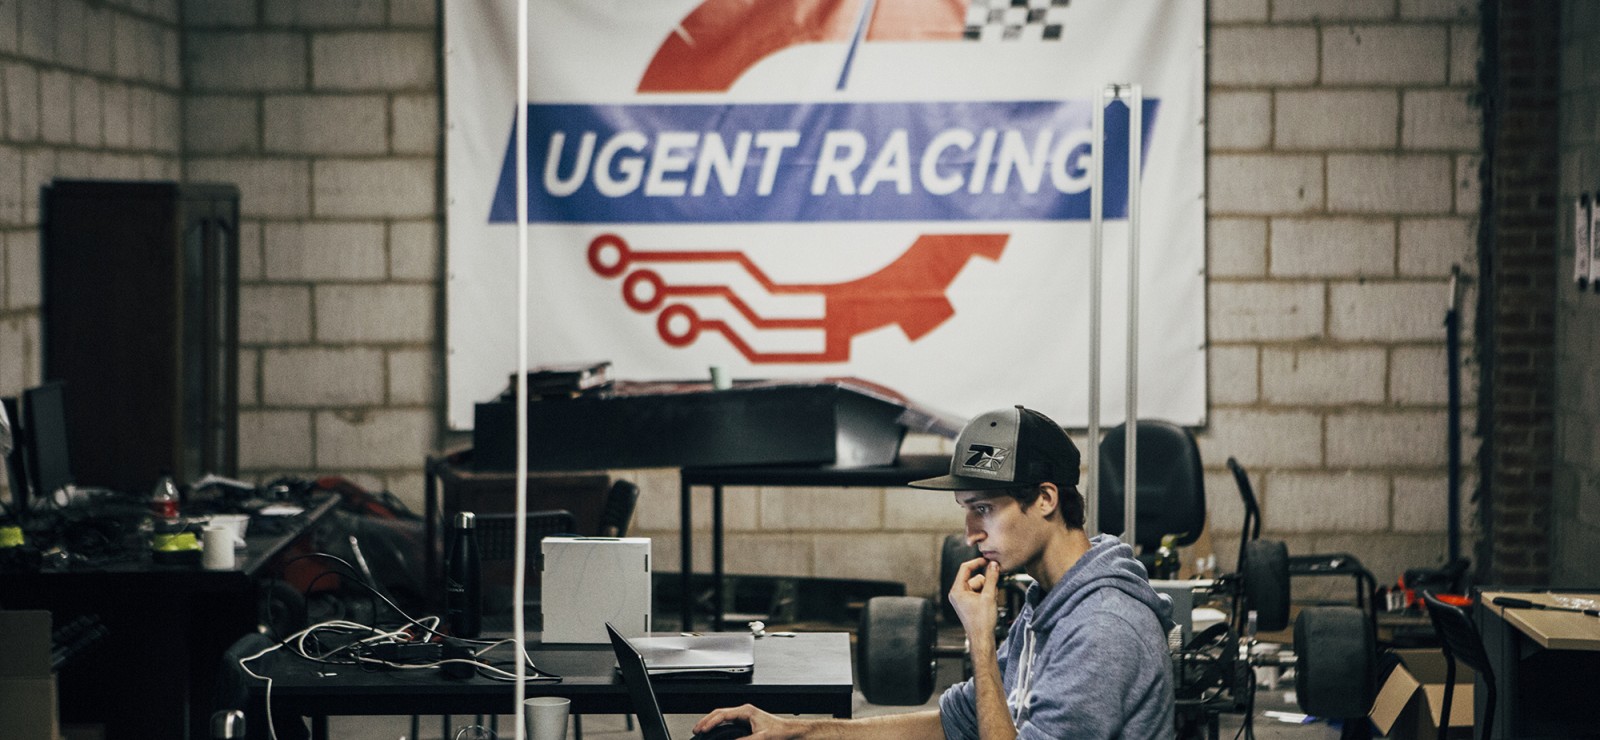 UGent Racing